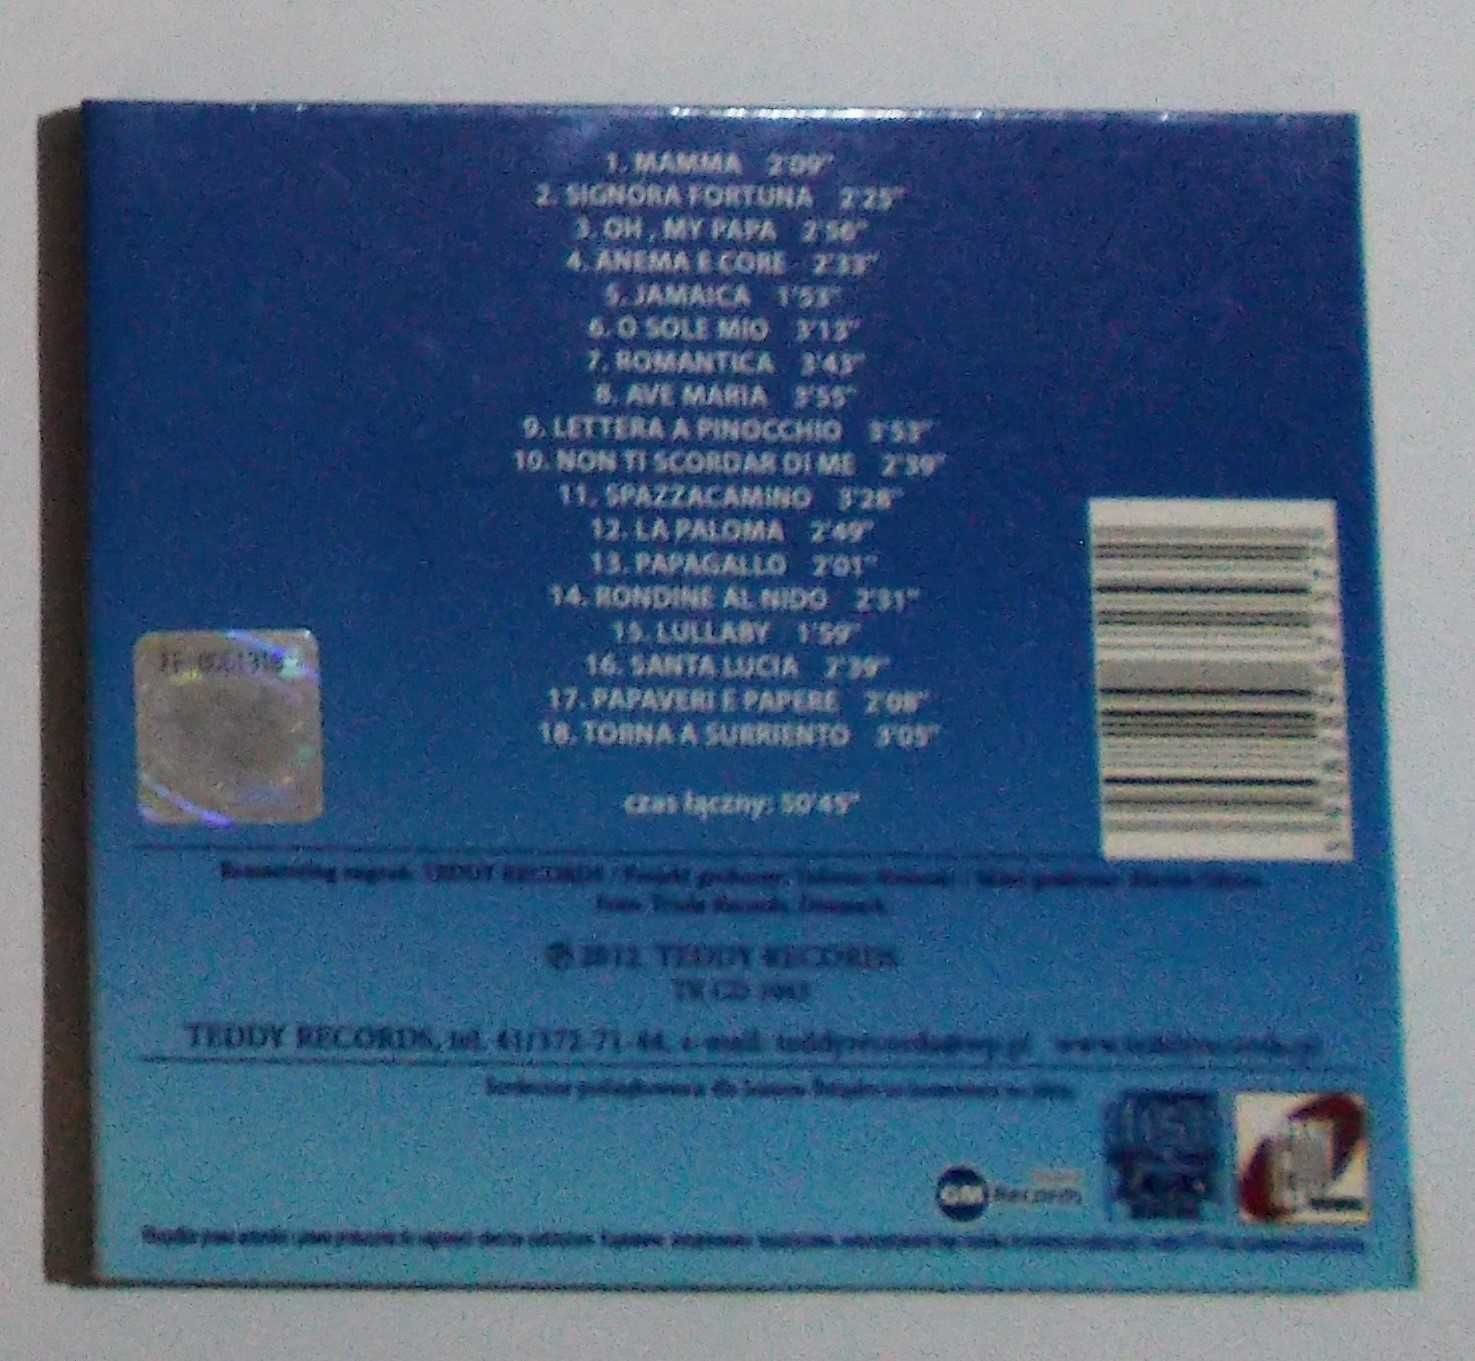 Robertino Loreti CD Seria Muzyka Wspomnień